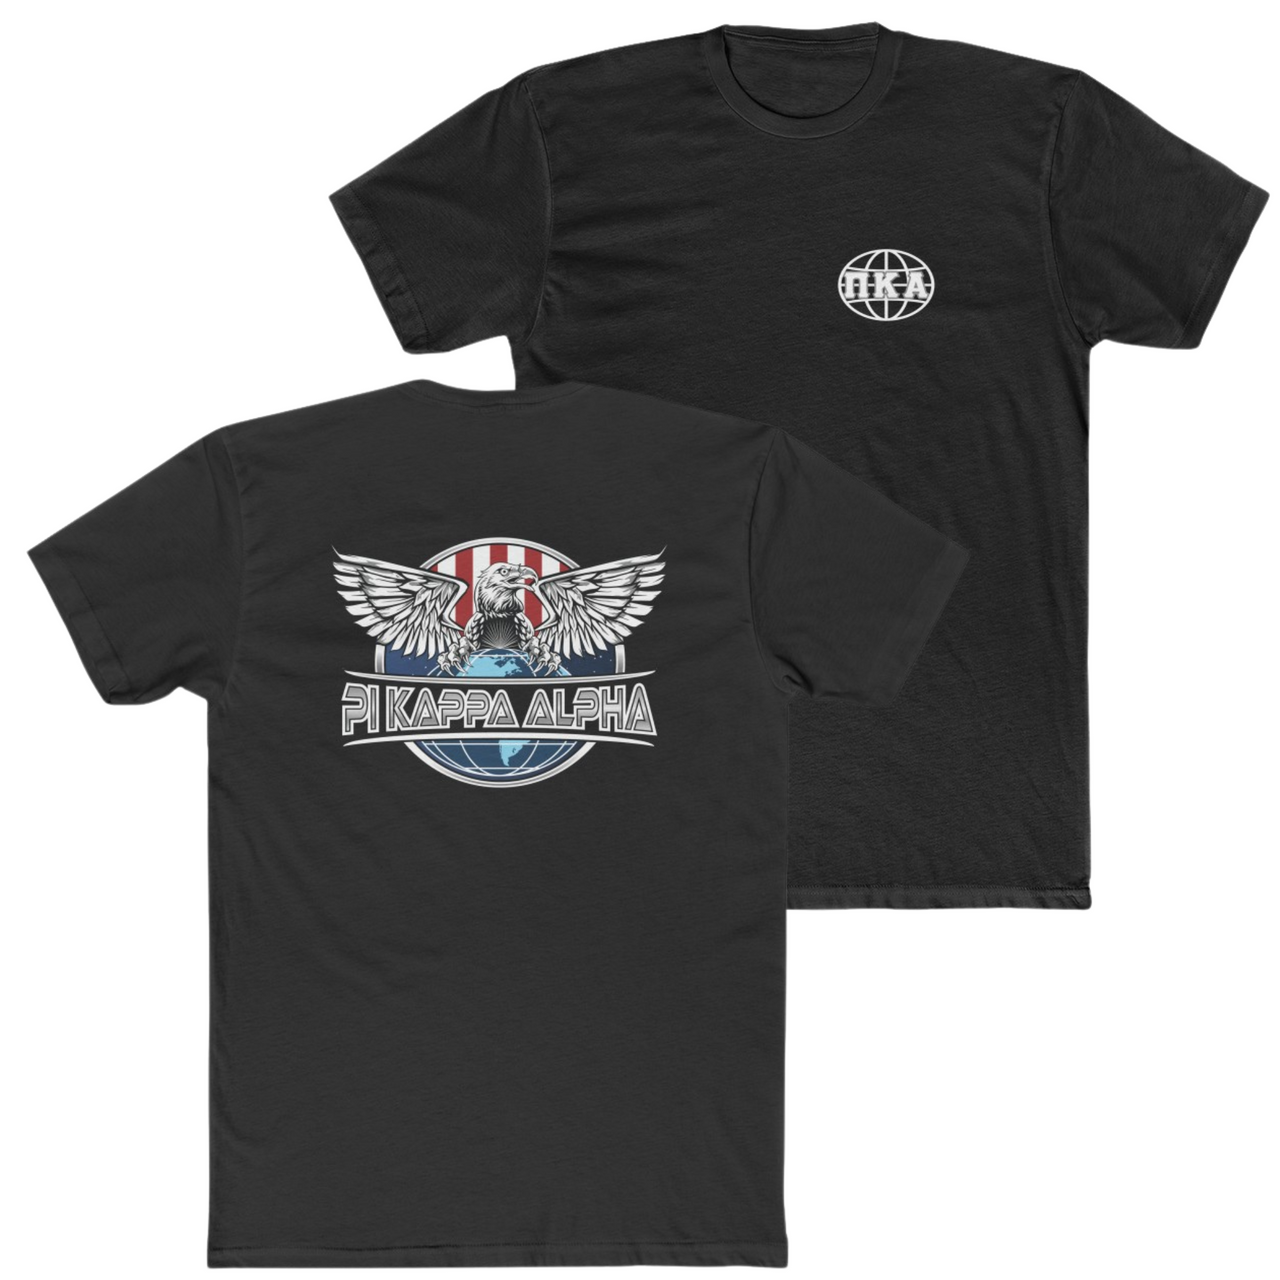 Black Pi Kappa Alpha Graphic T-Shirt | The Fraternal Order | Pi kappa alpha fraternity shirt 